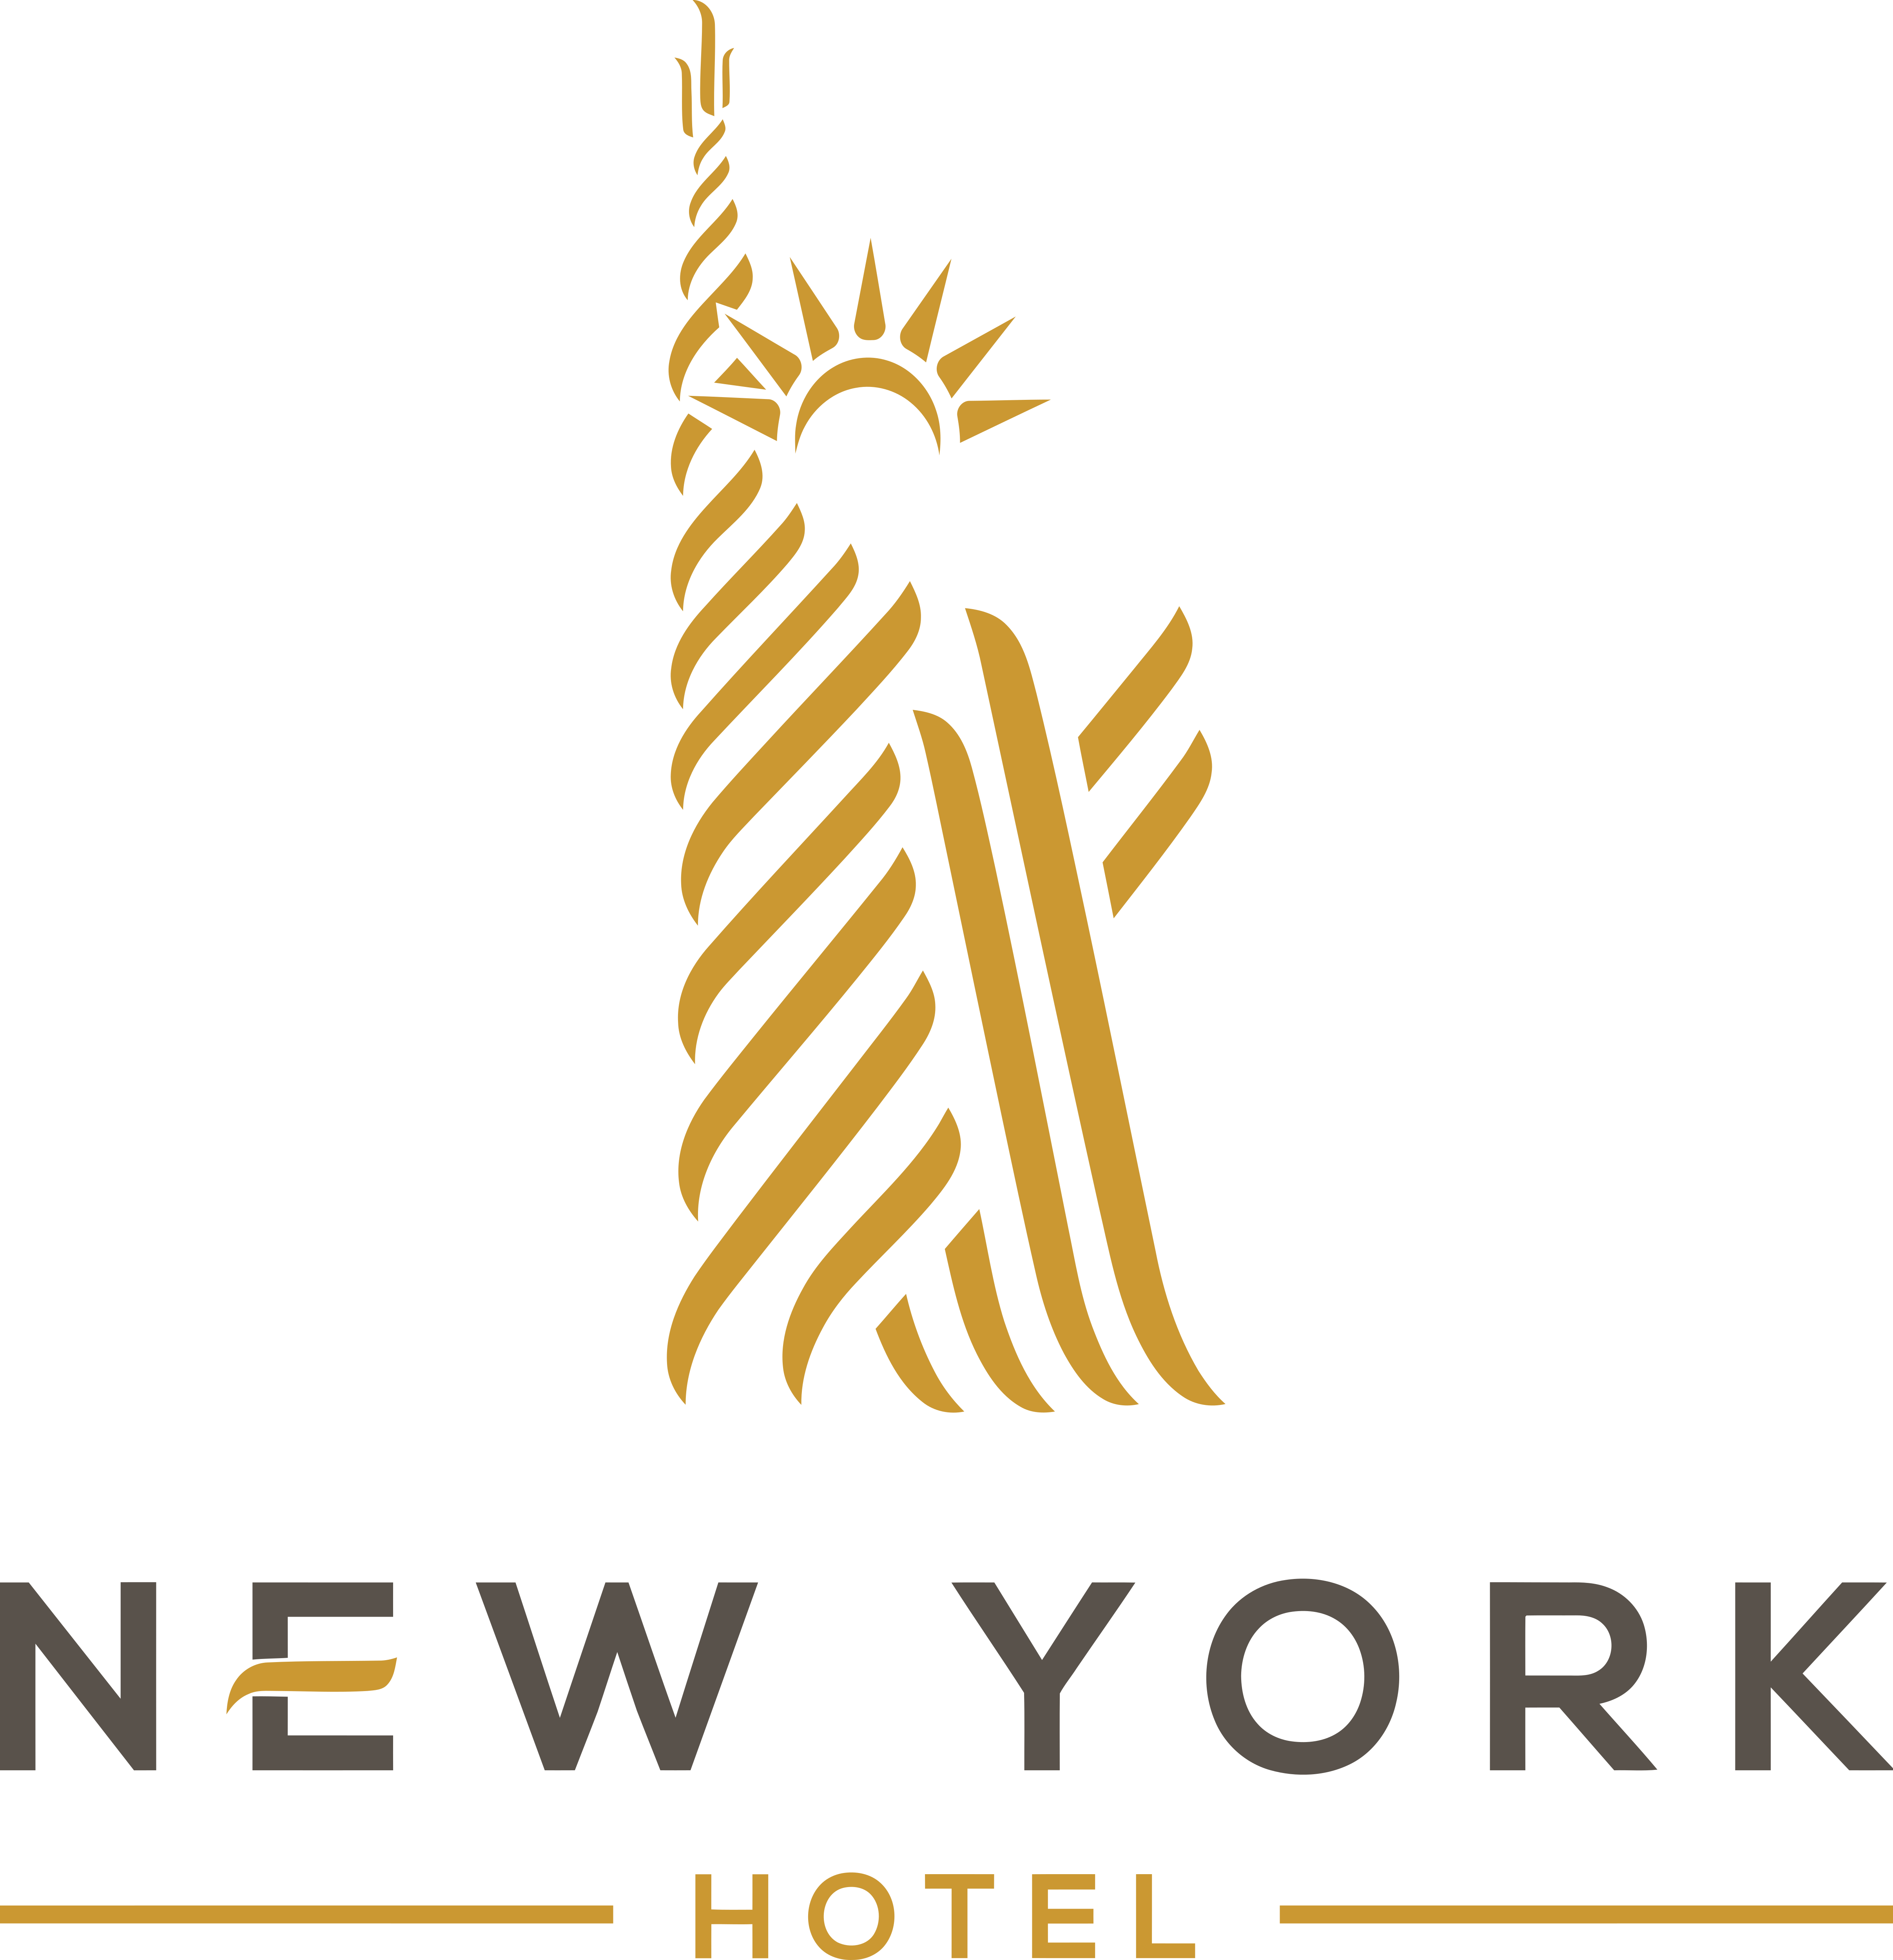 New York Hotel  Logos  Download